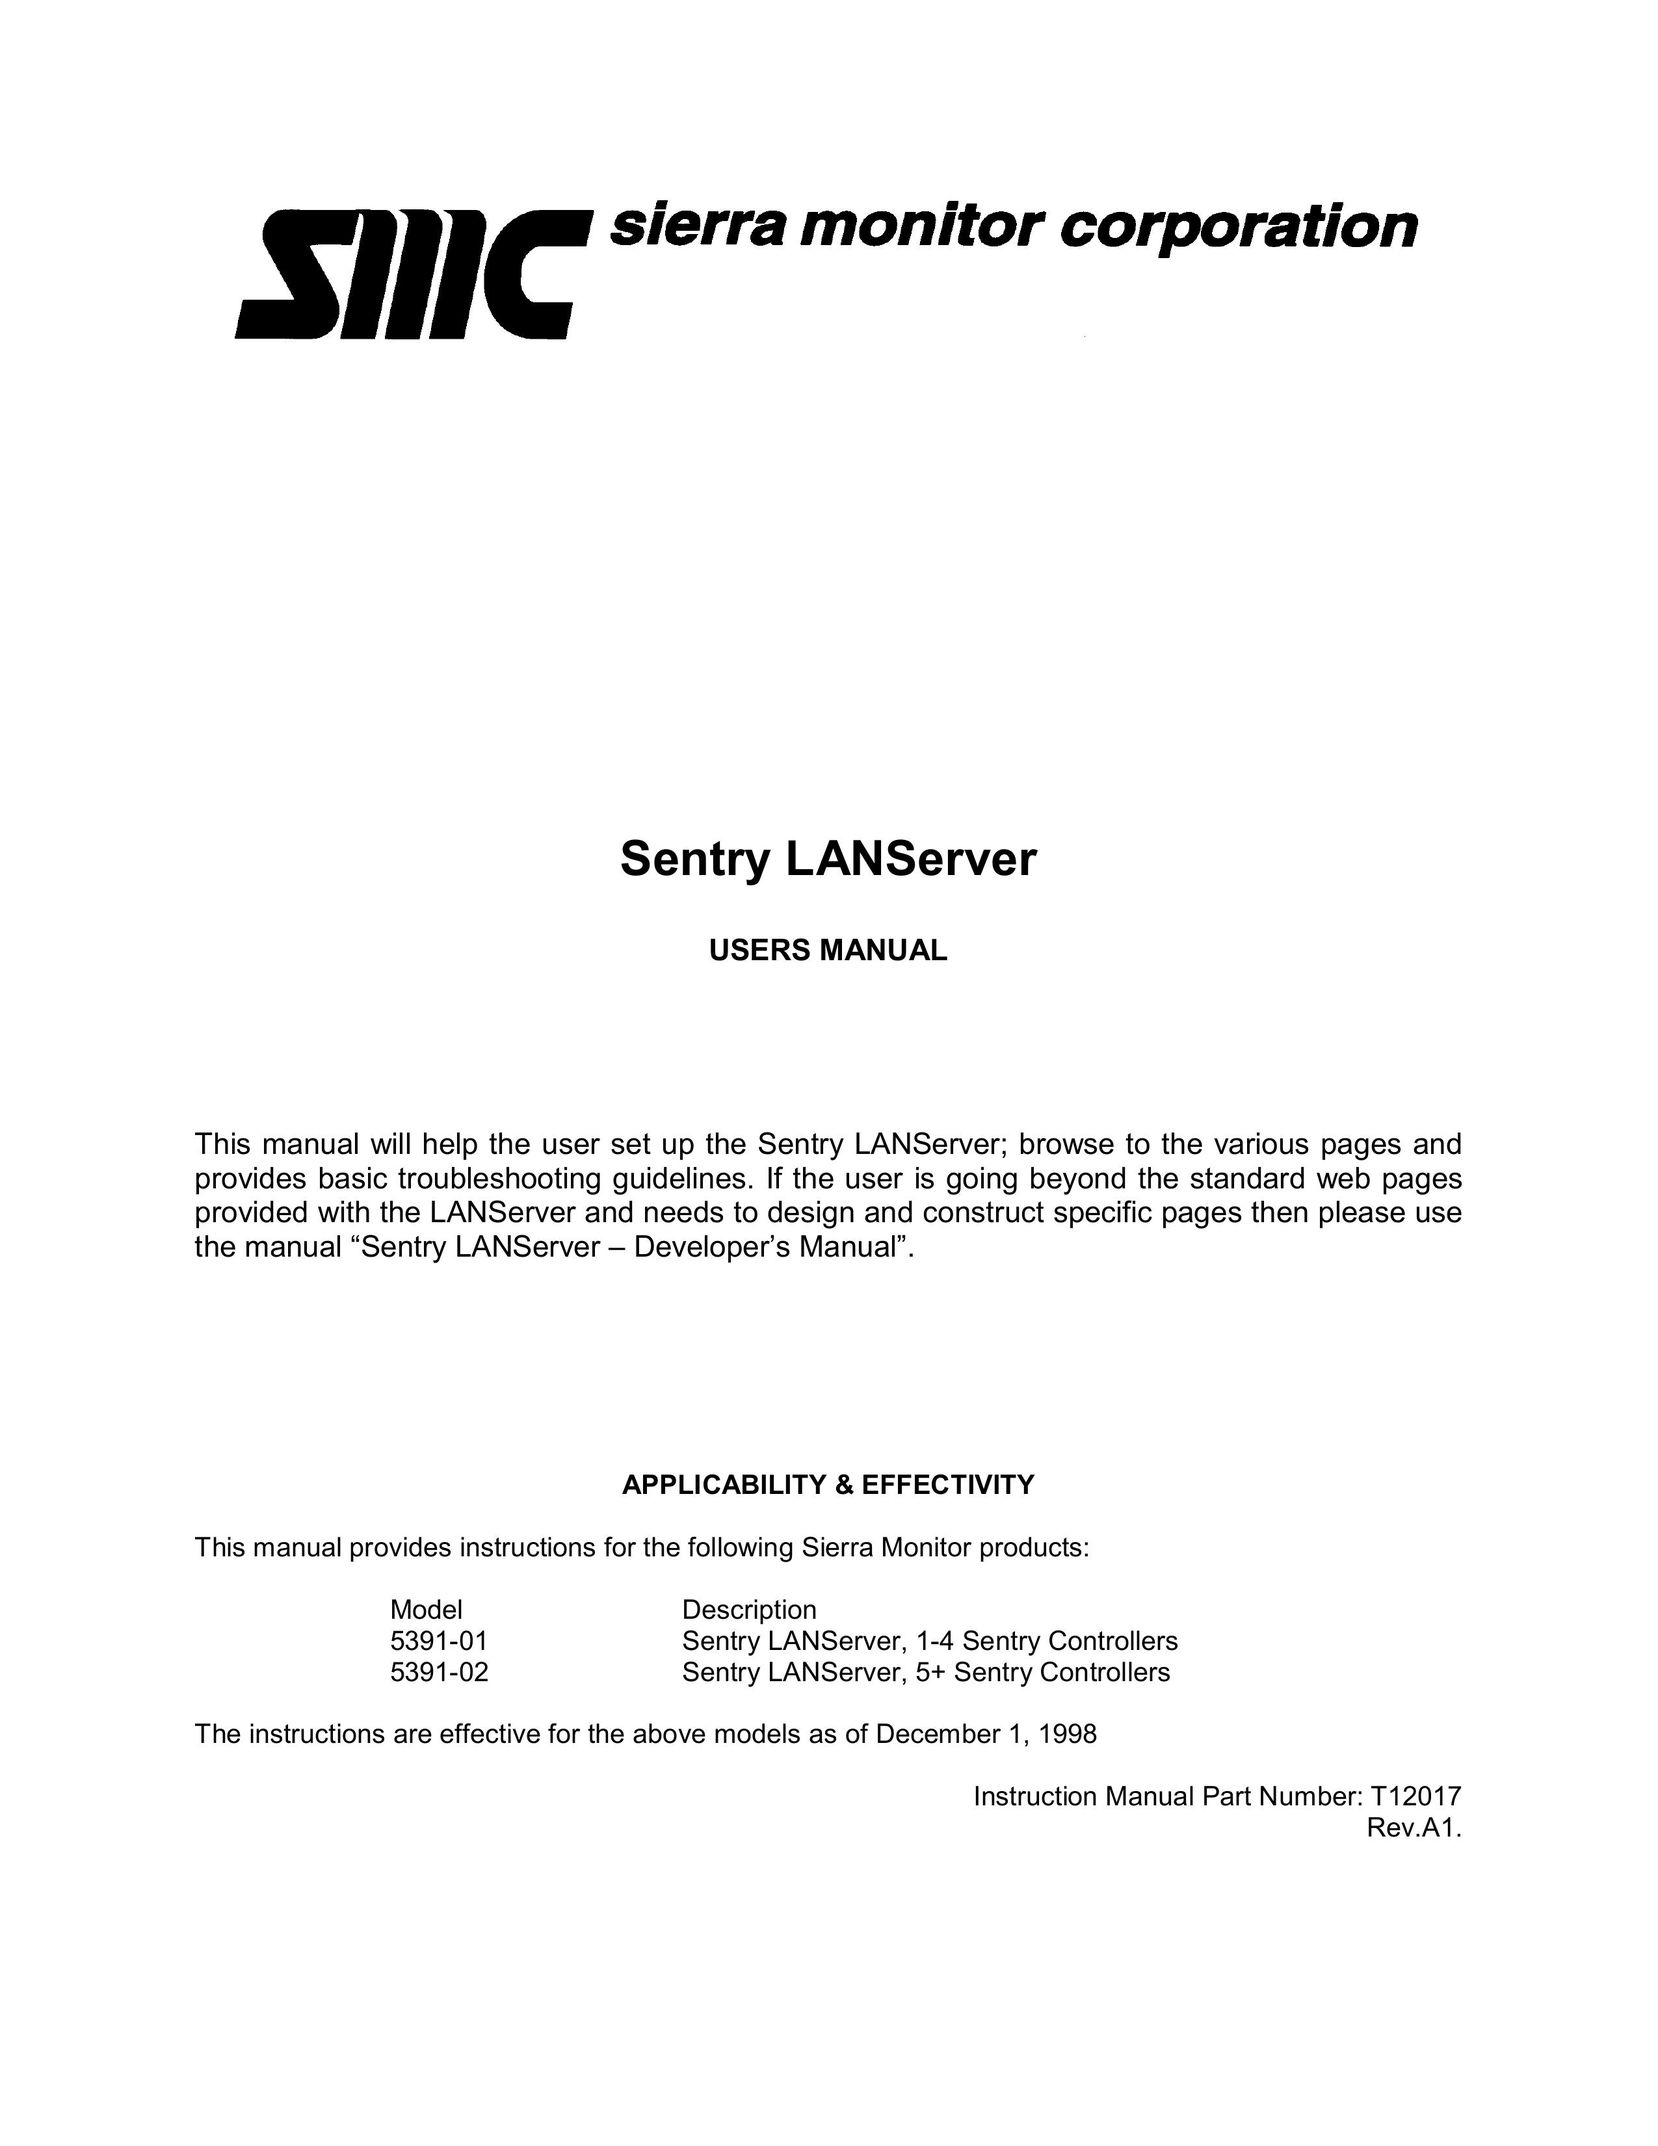 Sierra 5391-01 Server User Manual